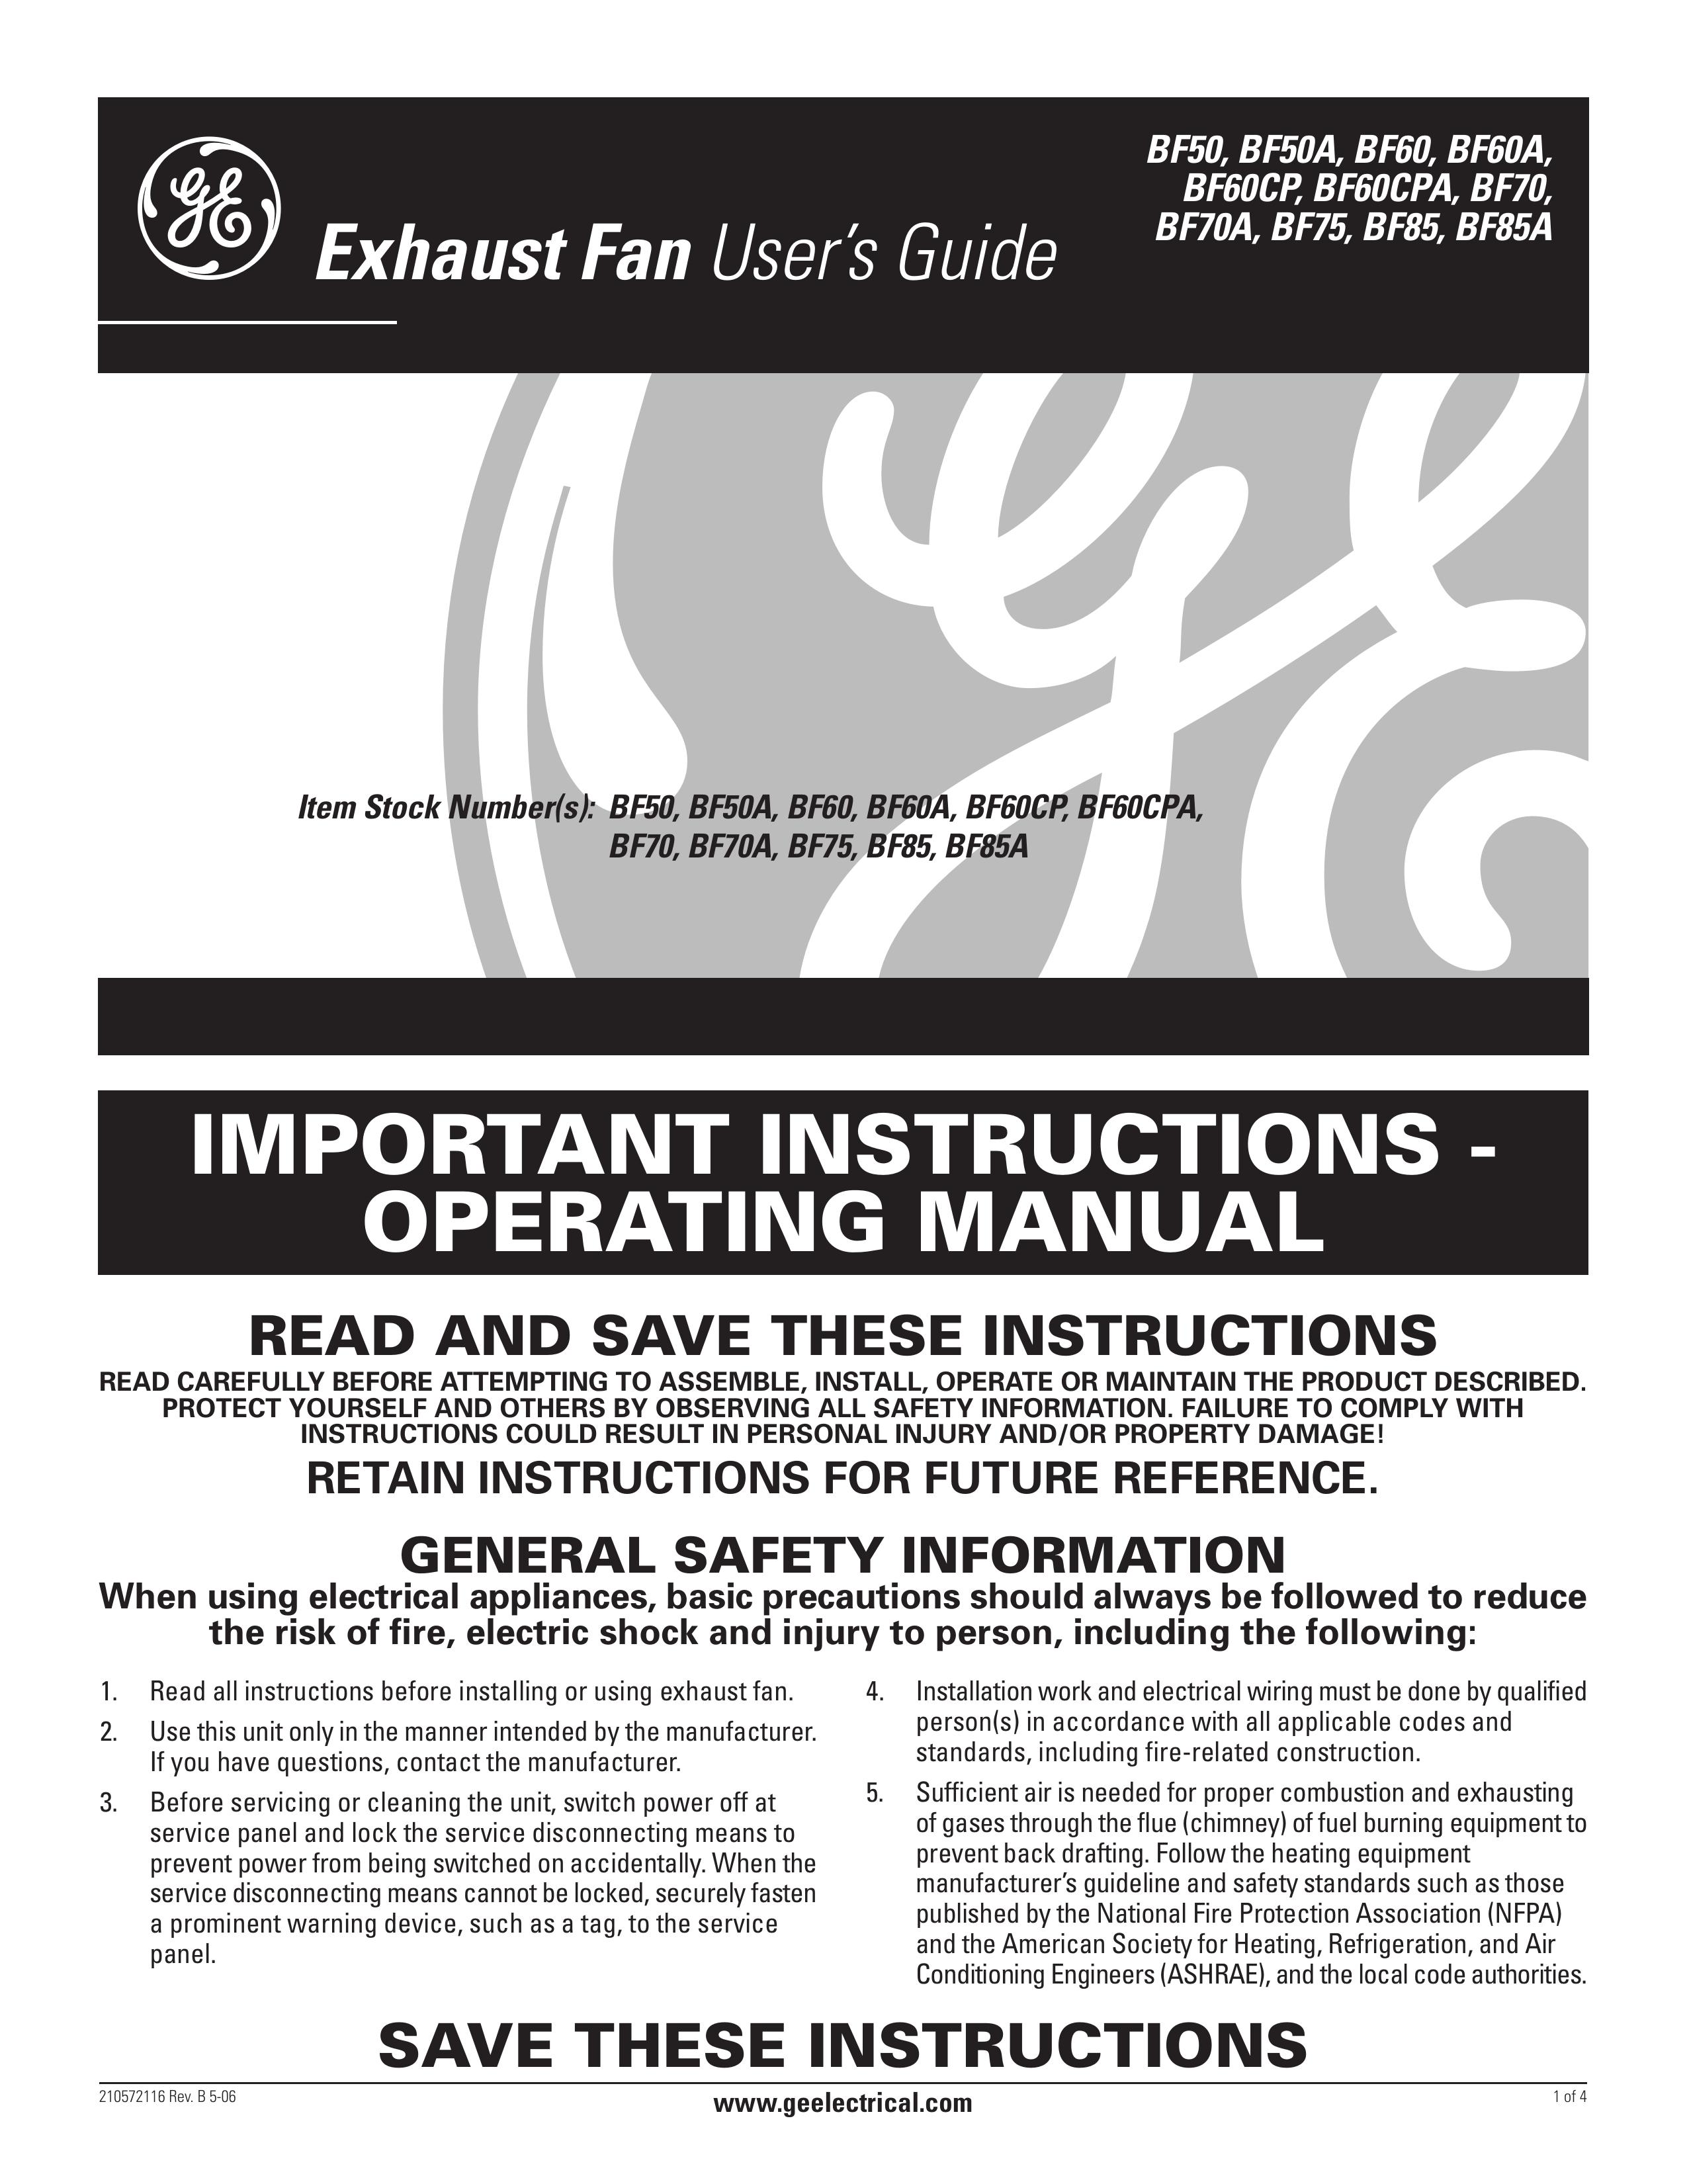 GE BF60 Ventilation Hood User Manual